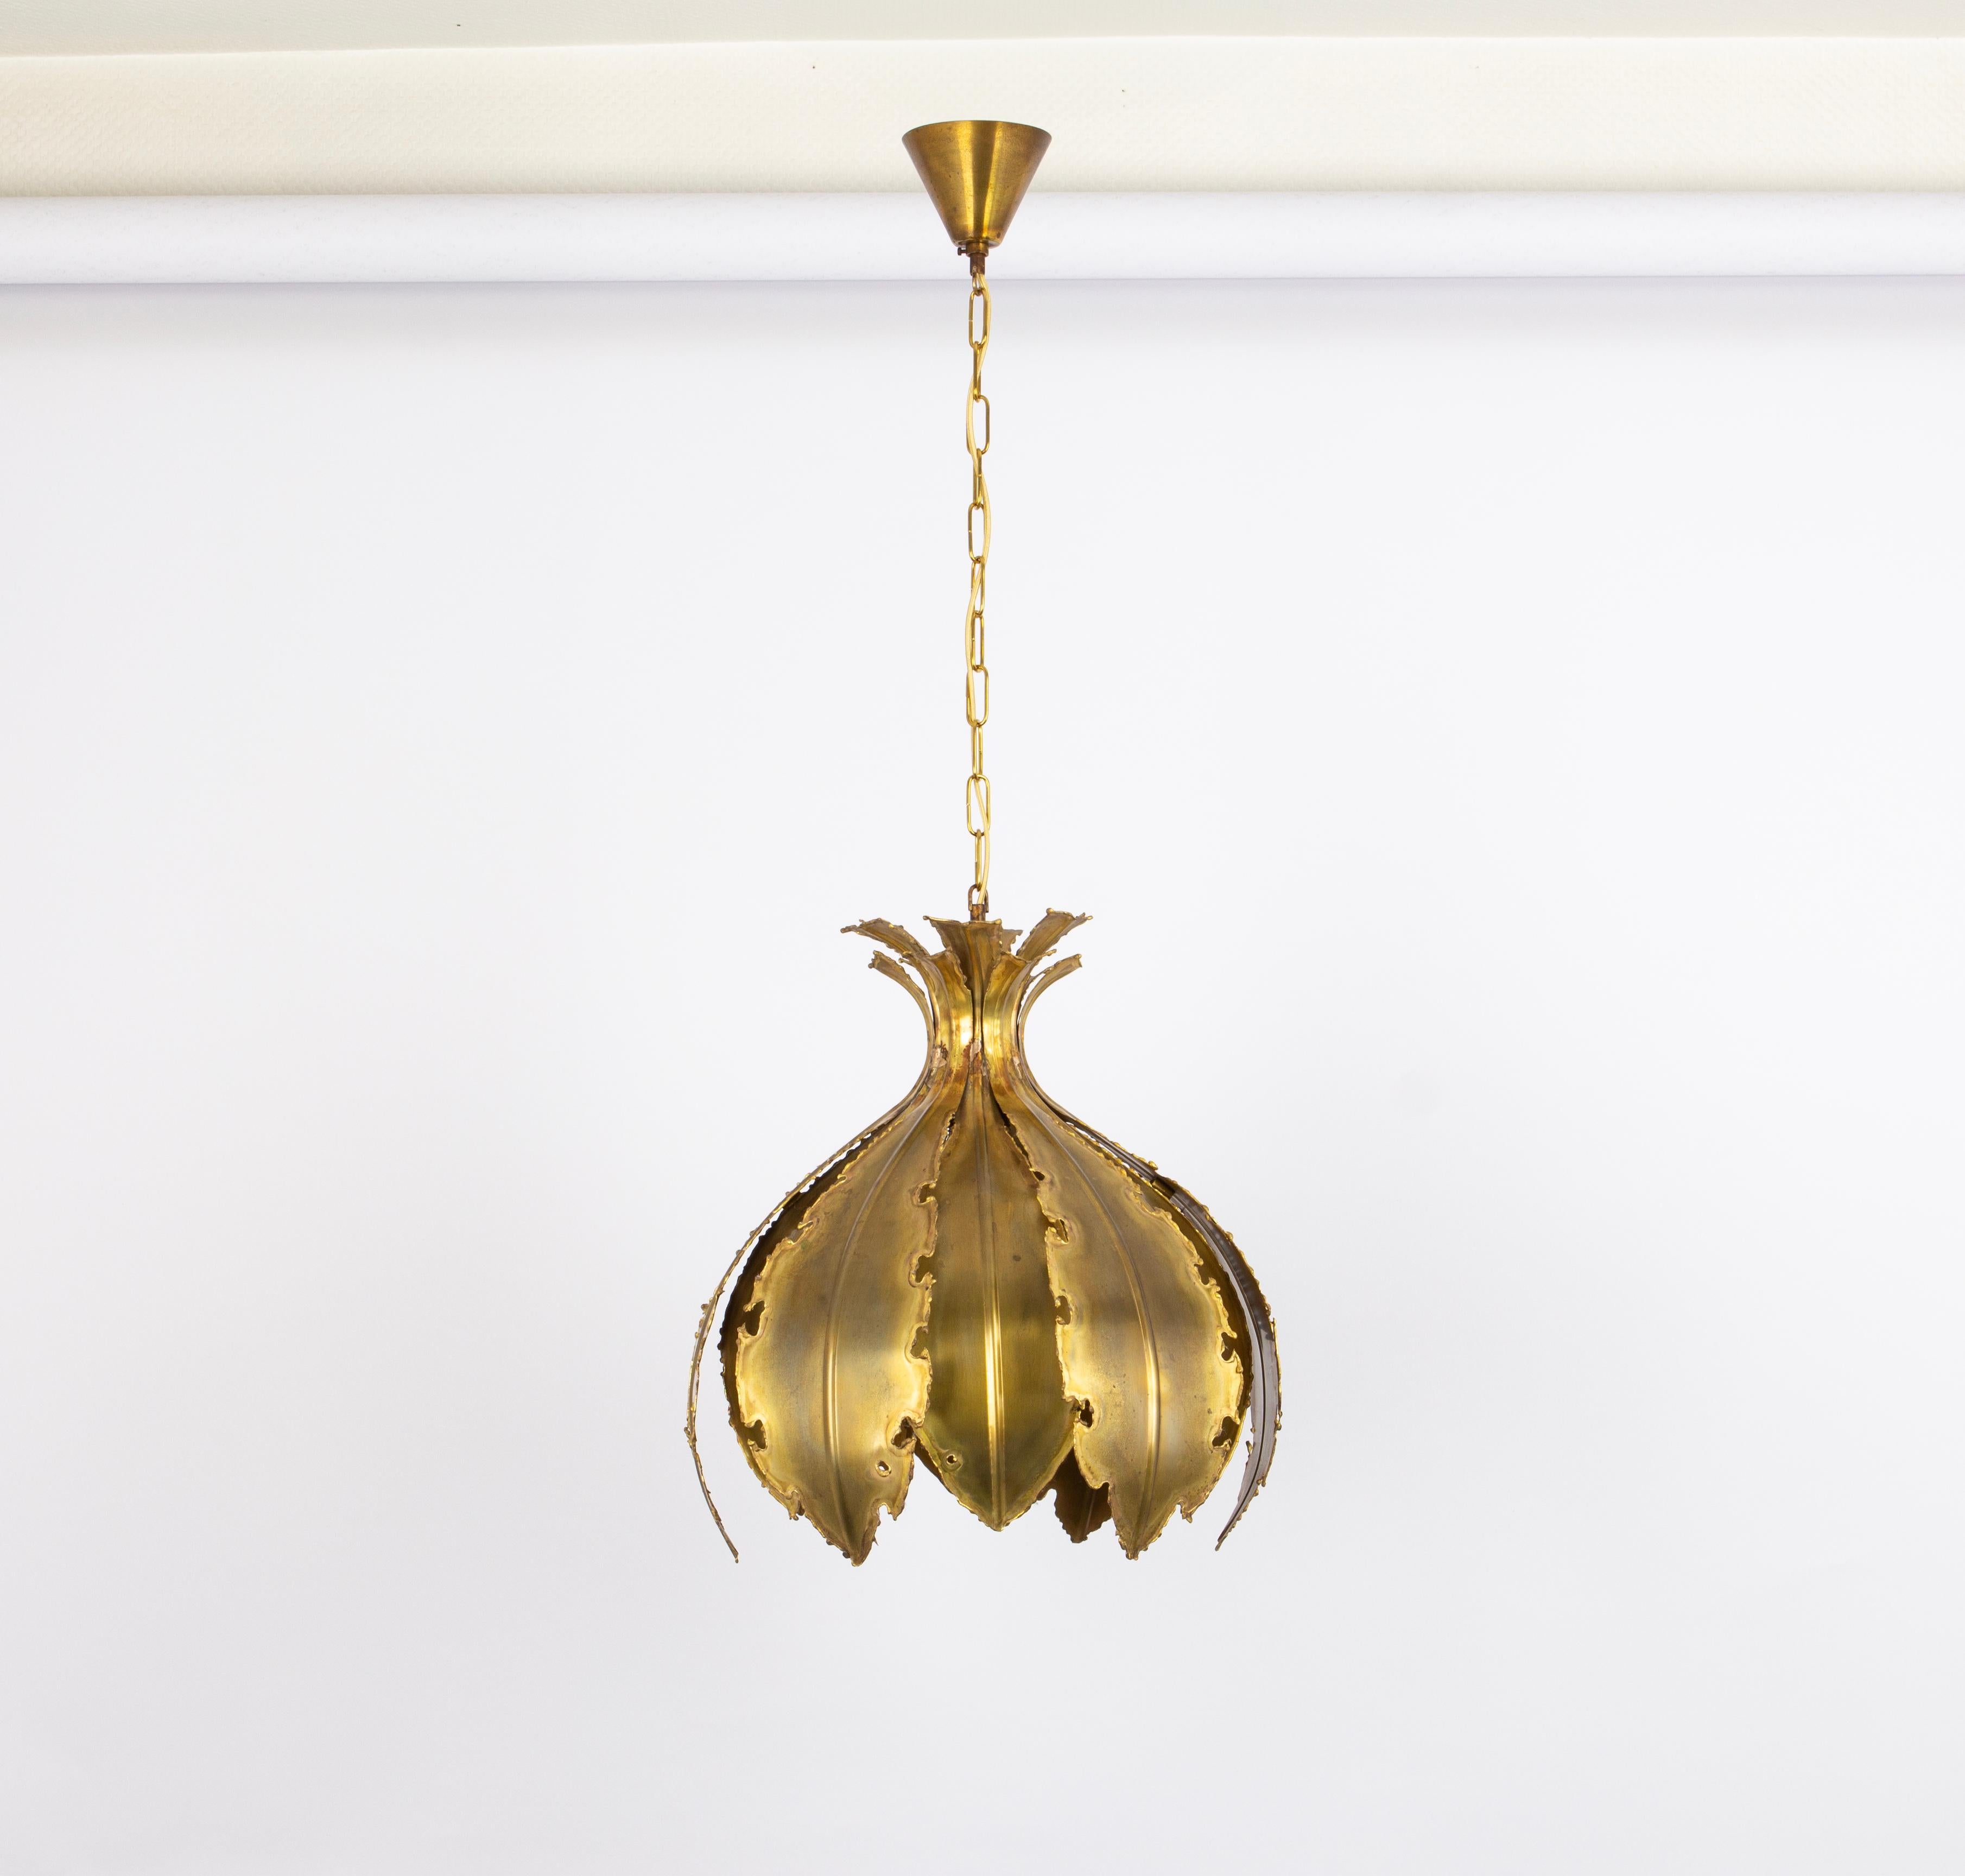 1 of 3 Stunning Brass Pendants designed svend Aage Holm Sørensen, Denmark, 1960s
Mid-Century Brutalist patinated brass pendant by Svend Aage Holm Sørensen, Denmark. The lamp is named 'onion' model no. 6395. The pendant is composed of leaf-shaped